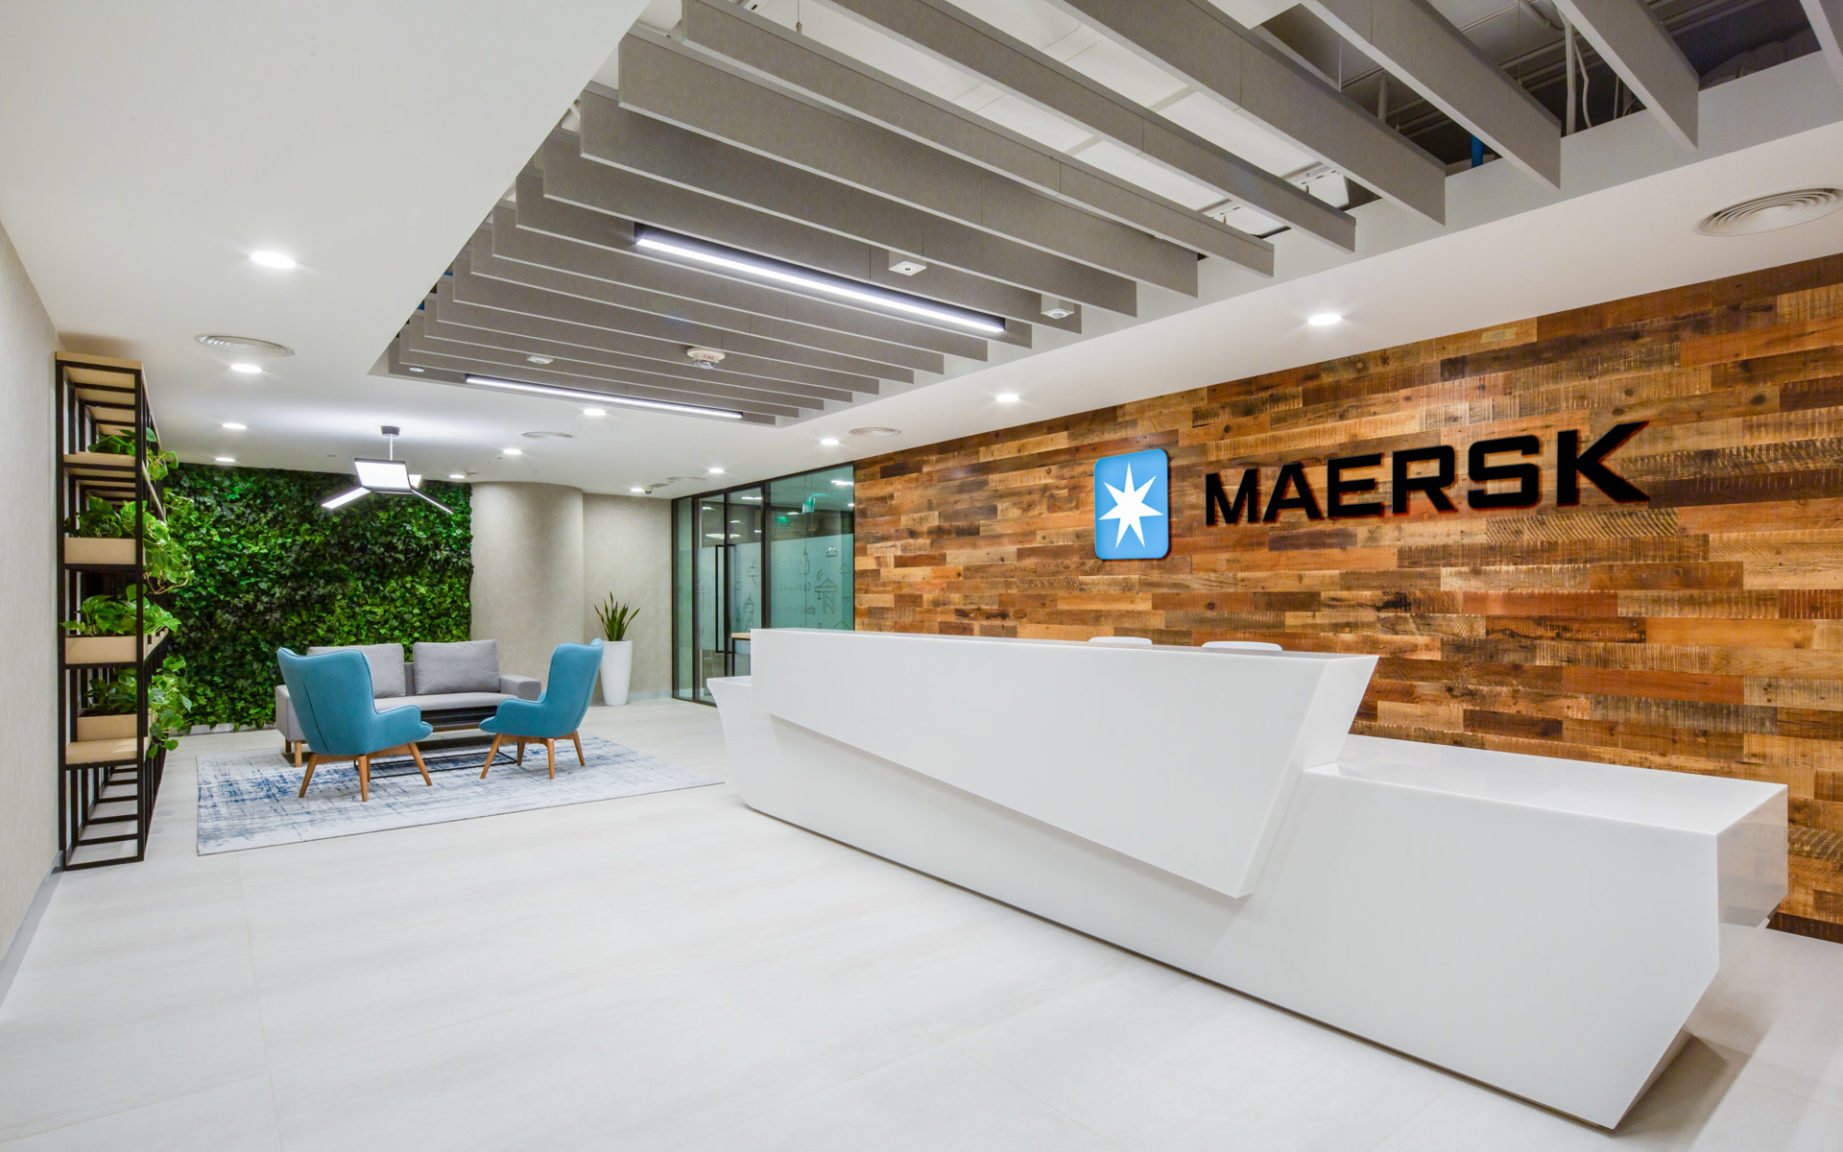 Maersk Office, Dubai Transportation Interior Design on Love That Design